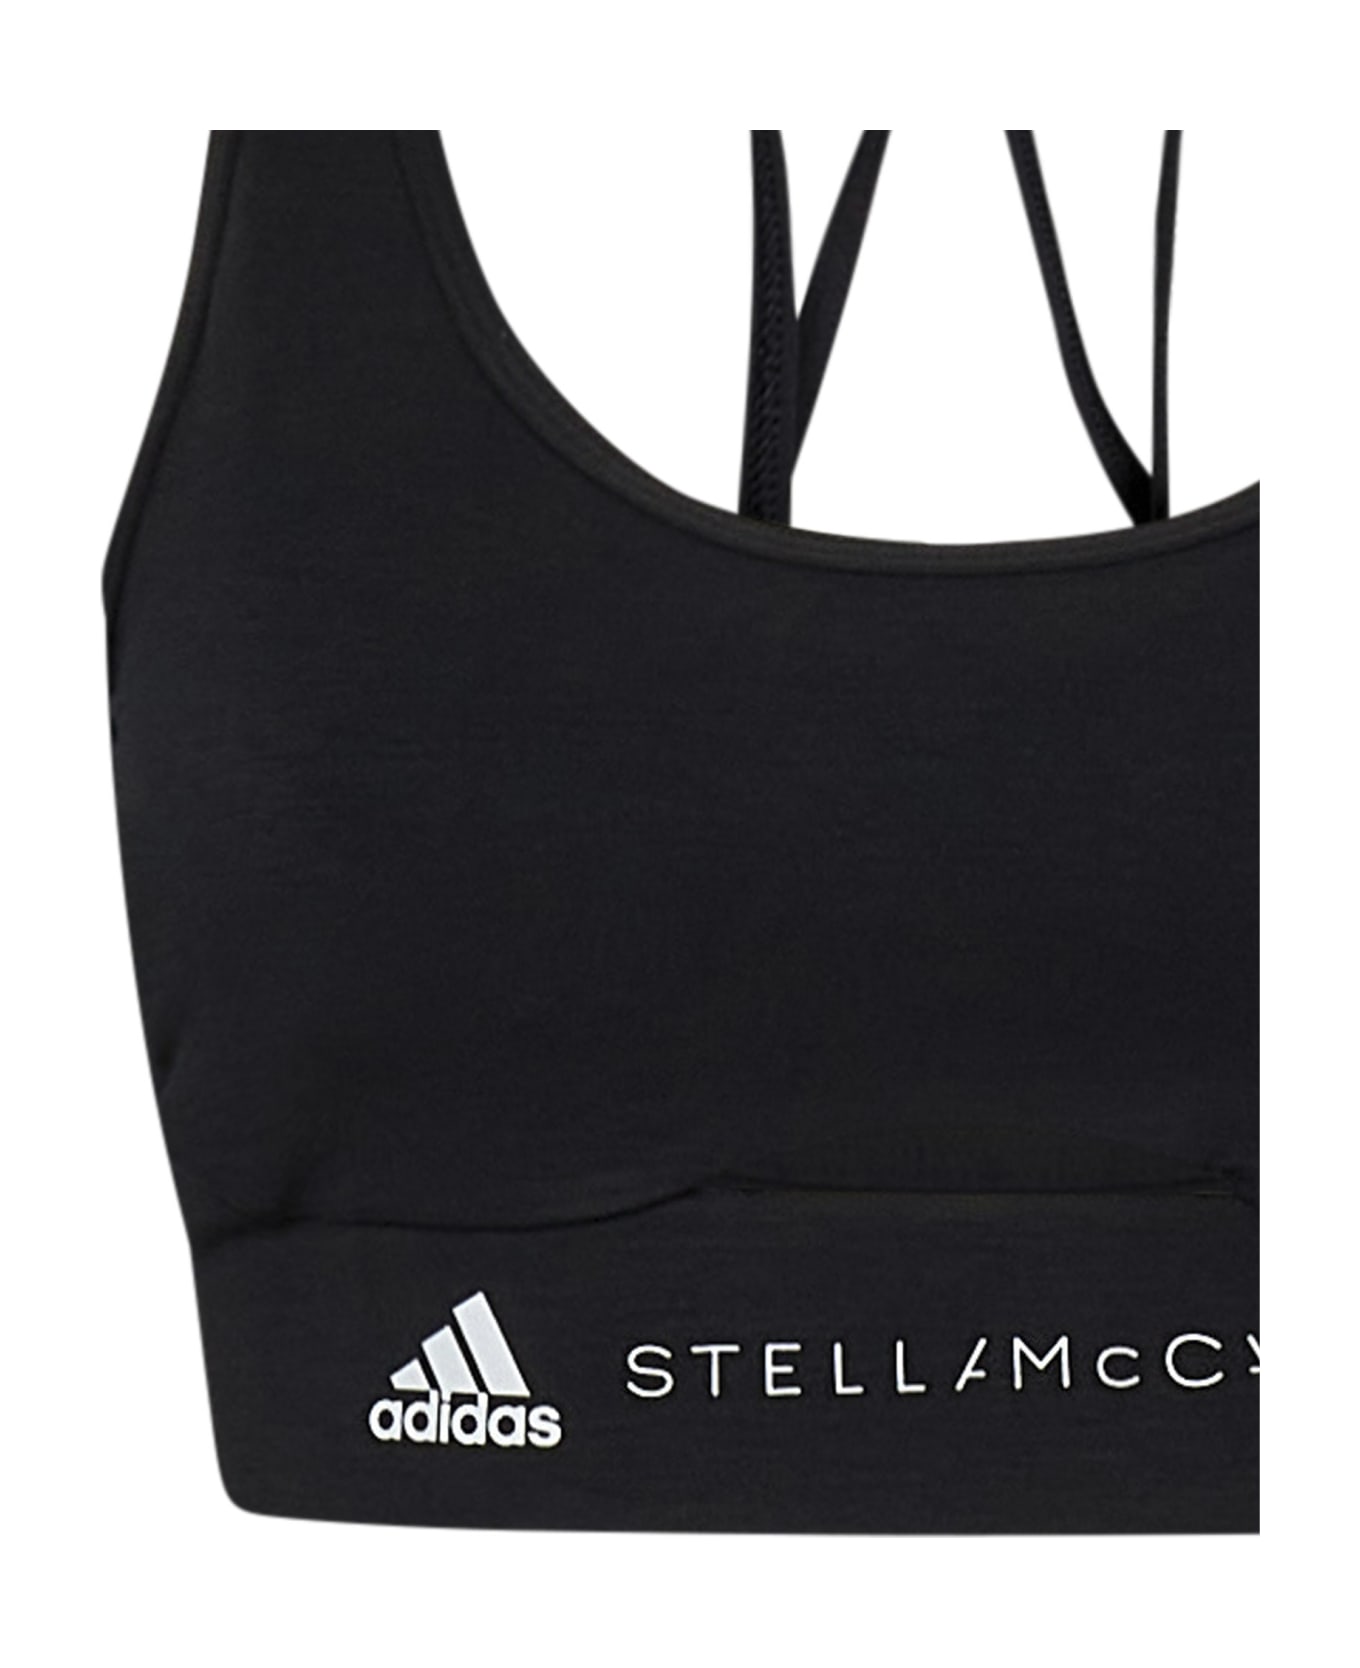 Adidas by Stella McCartney Top - Black タンクトップ